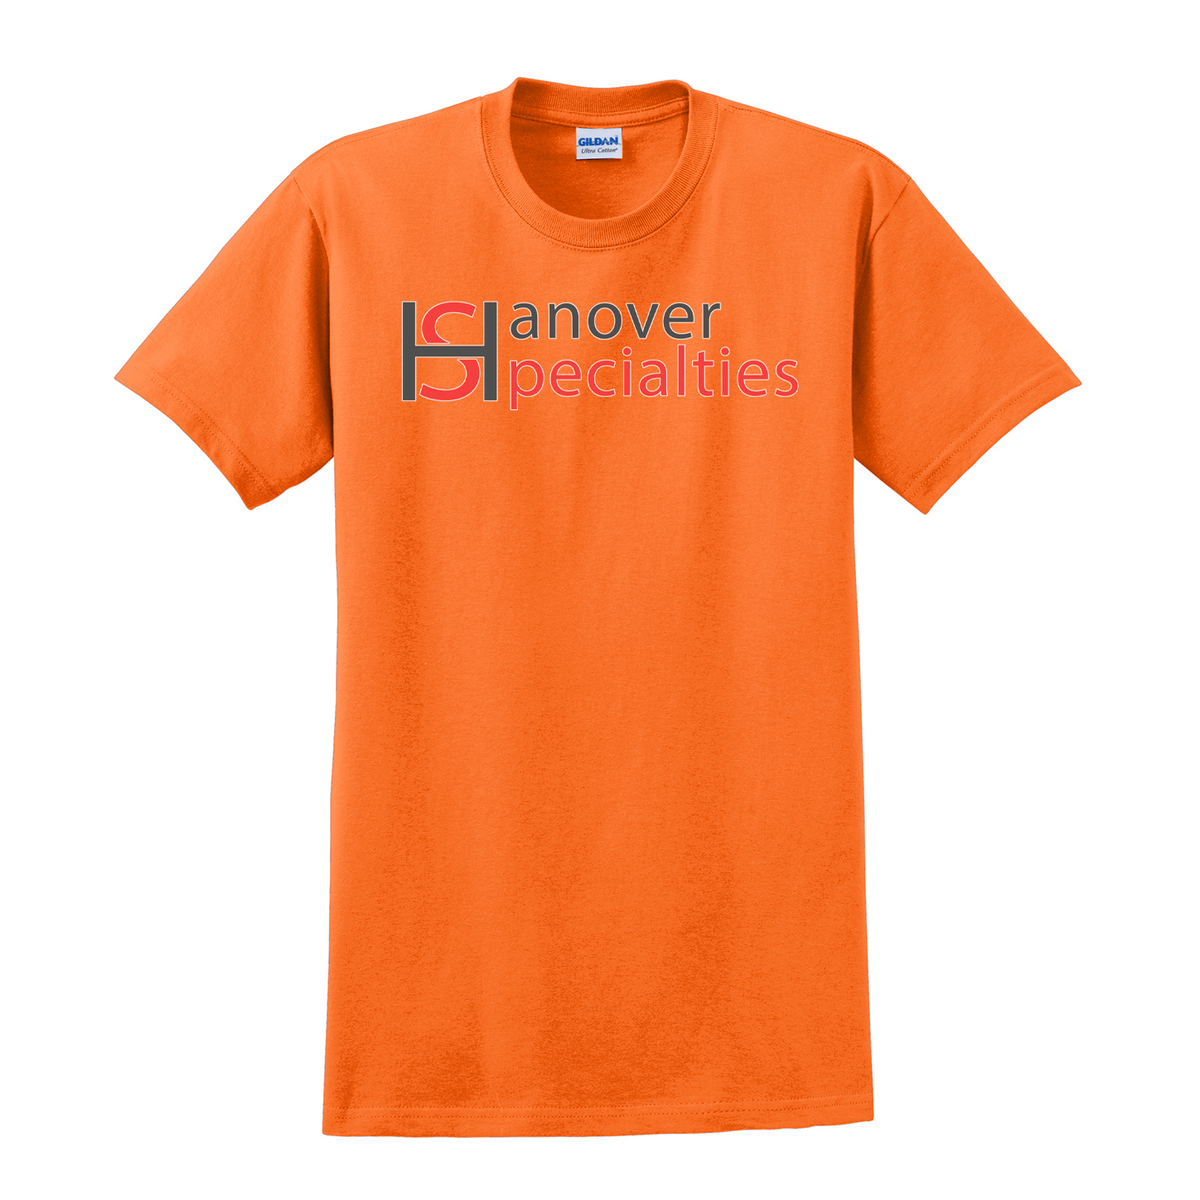 Hanover Specialties T-Shirt